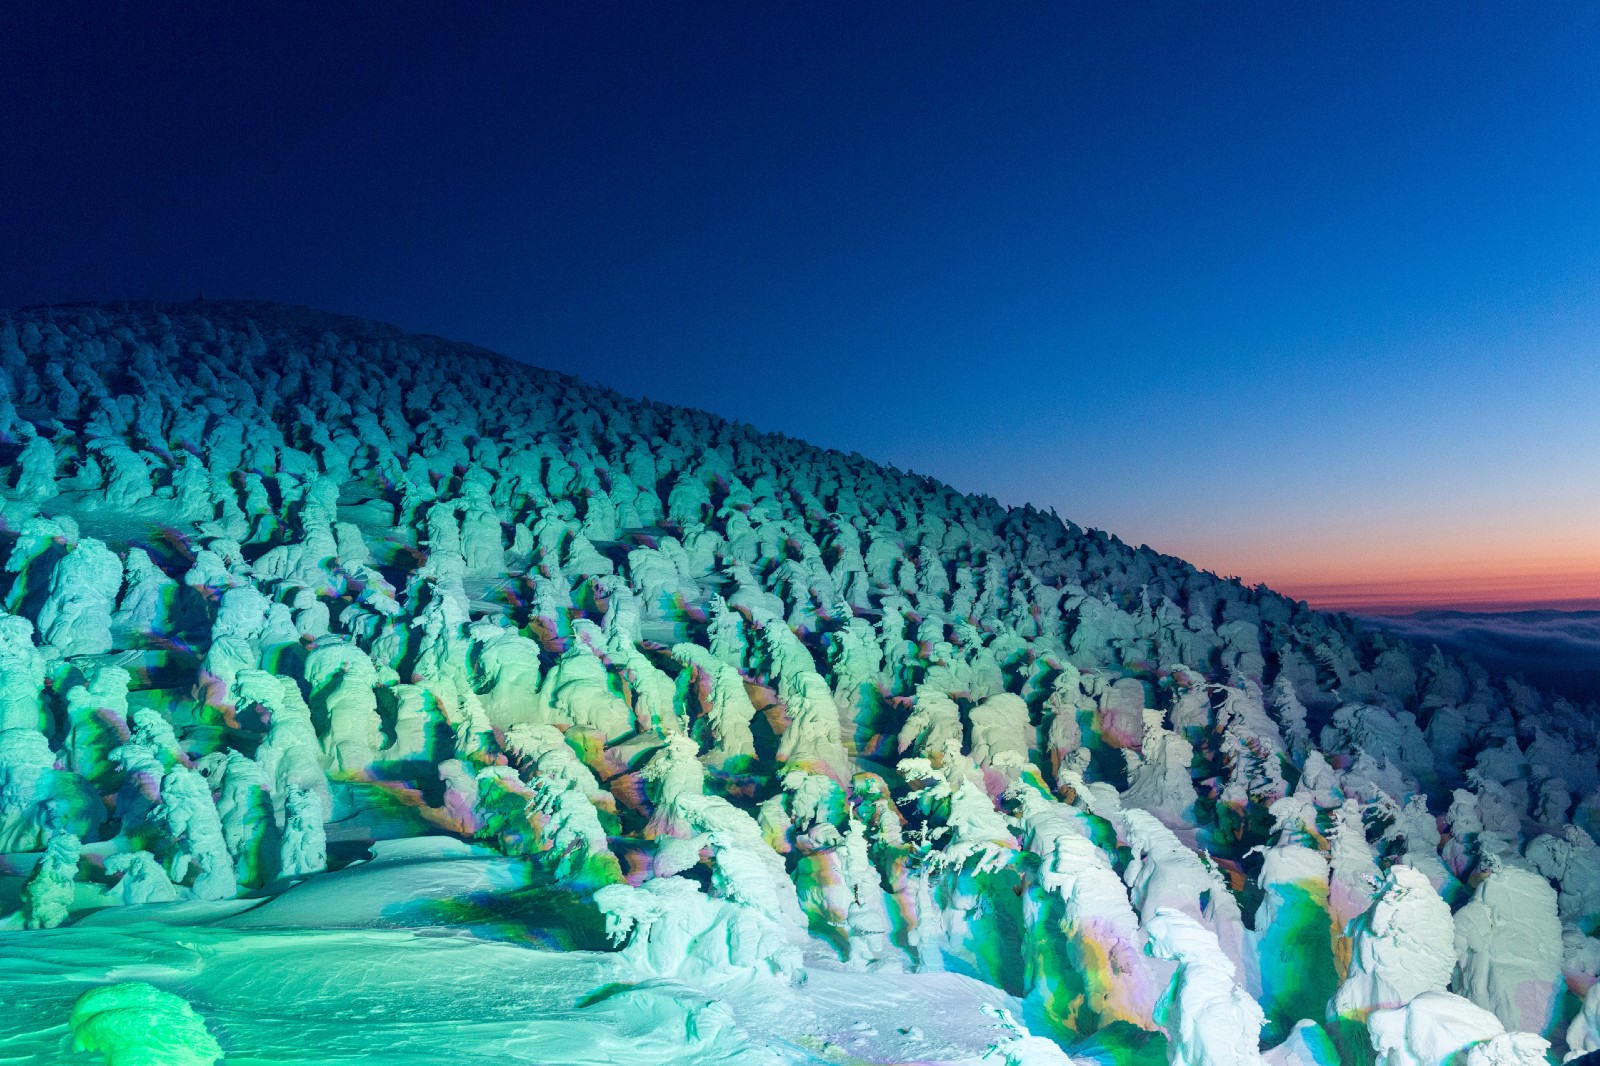 Zao Onsen : Meet the Snow Monsters at Zao Onsen Ski Resort!